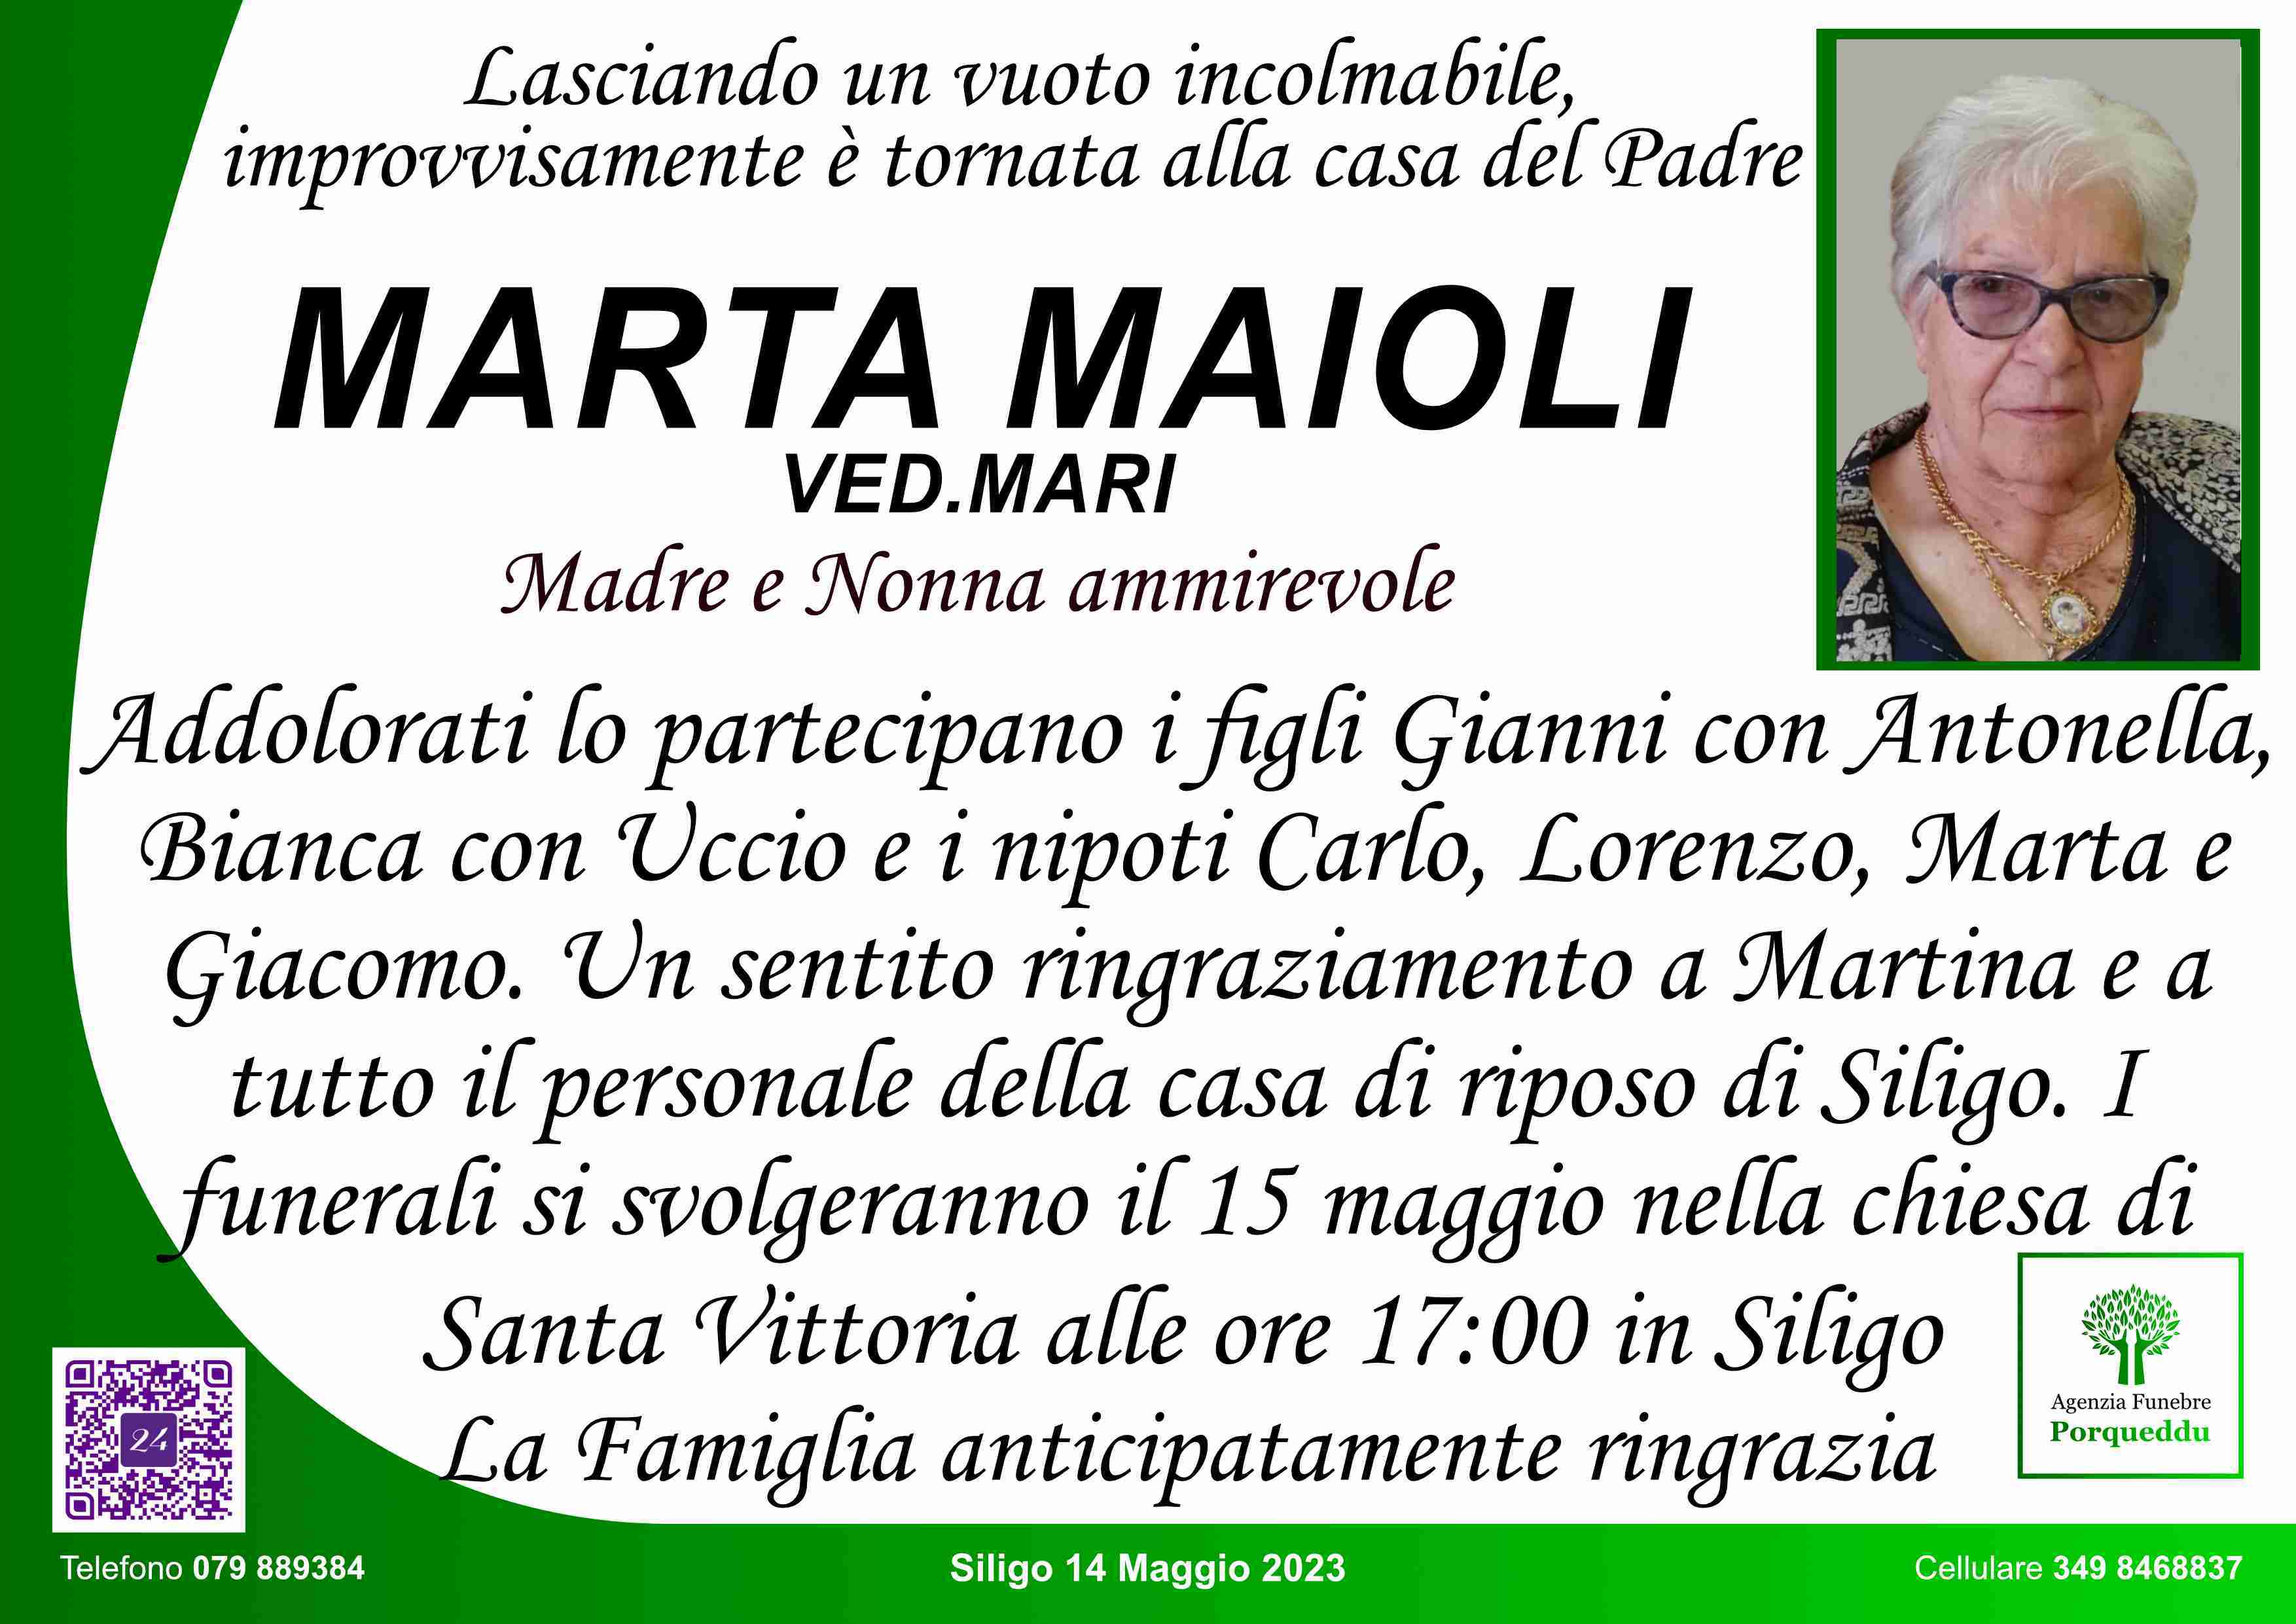 Marta Maioli